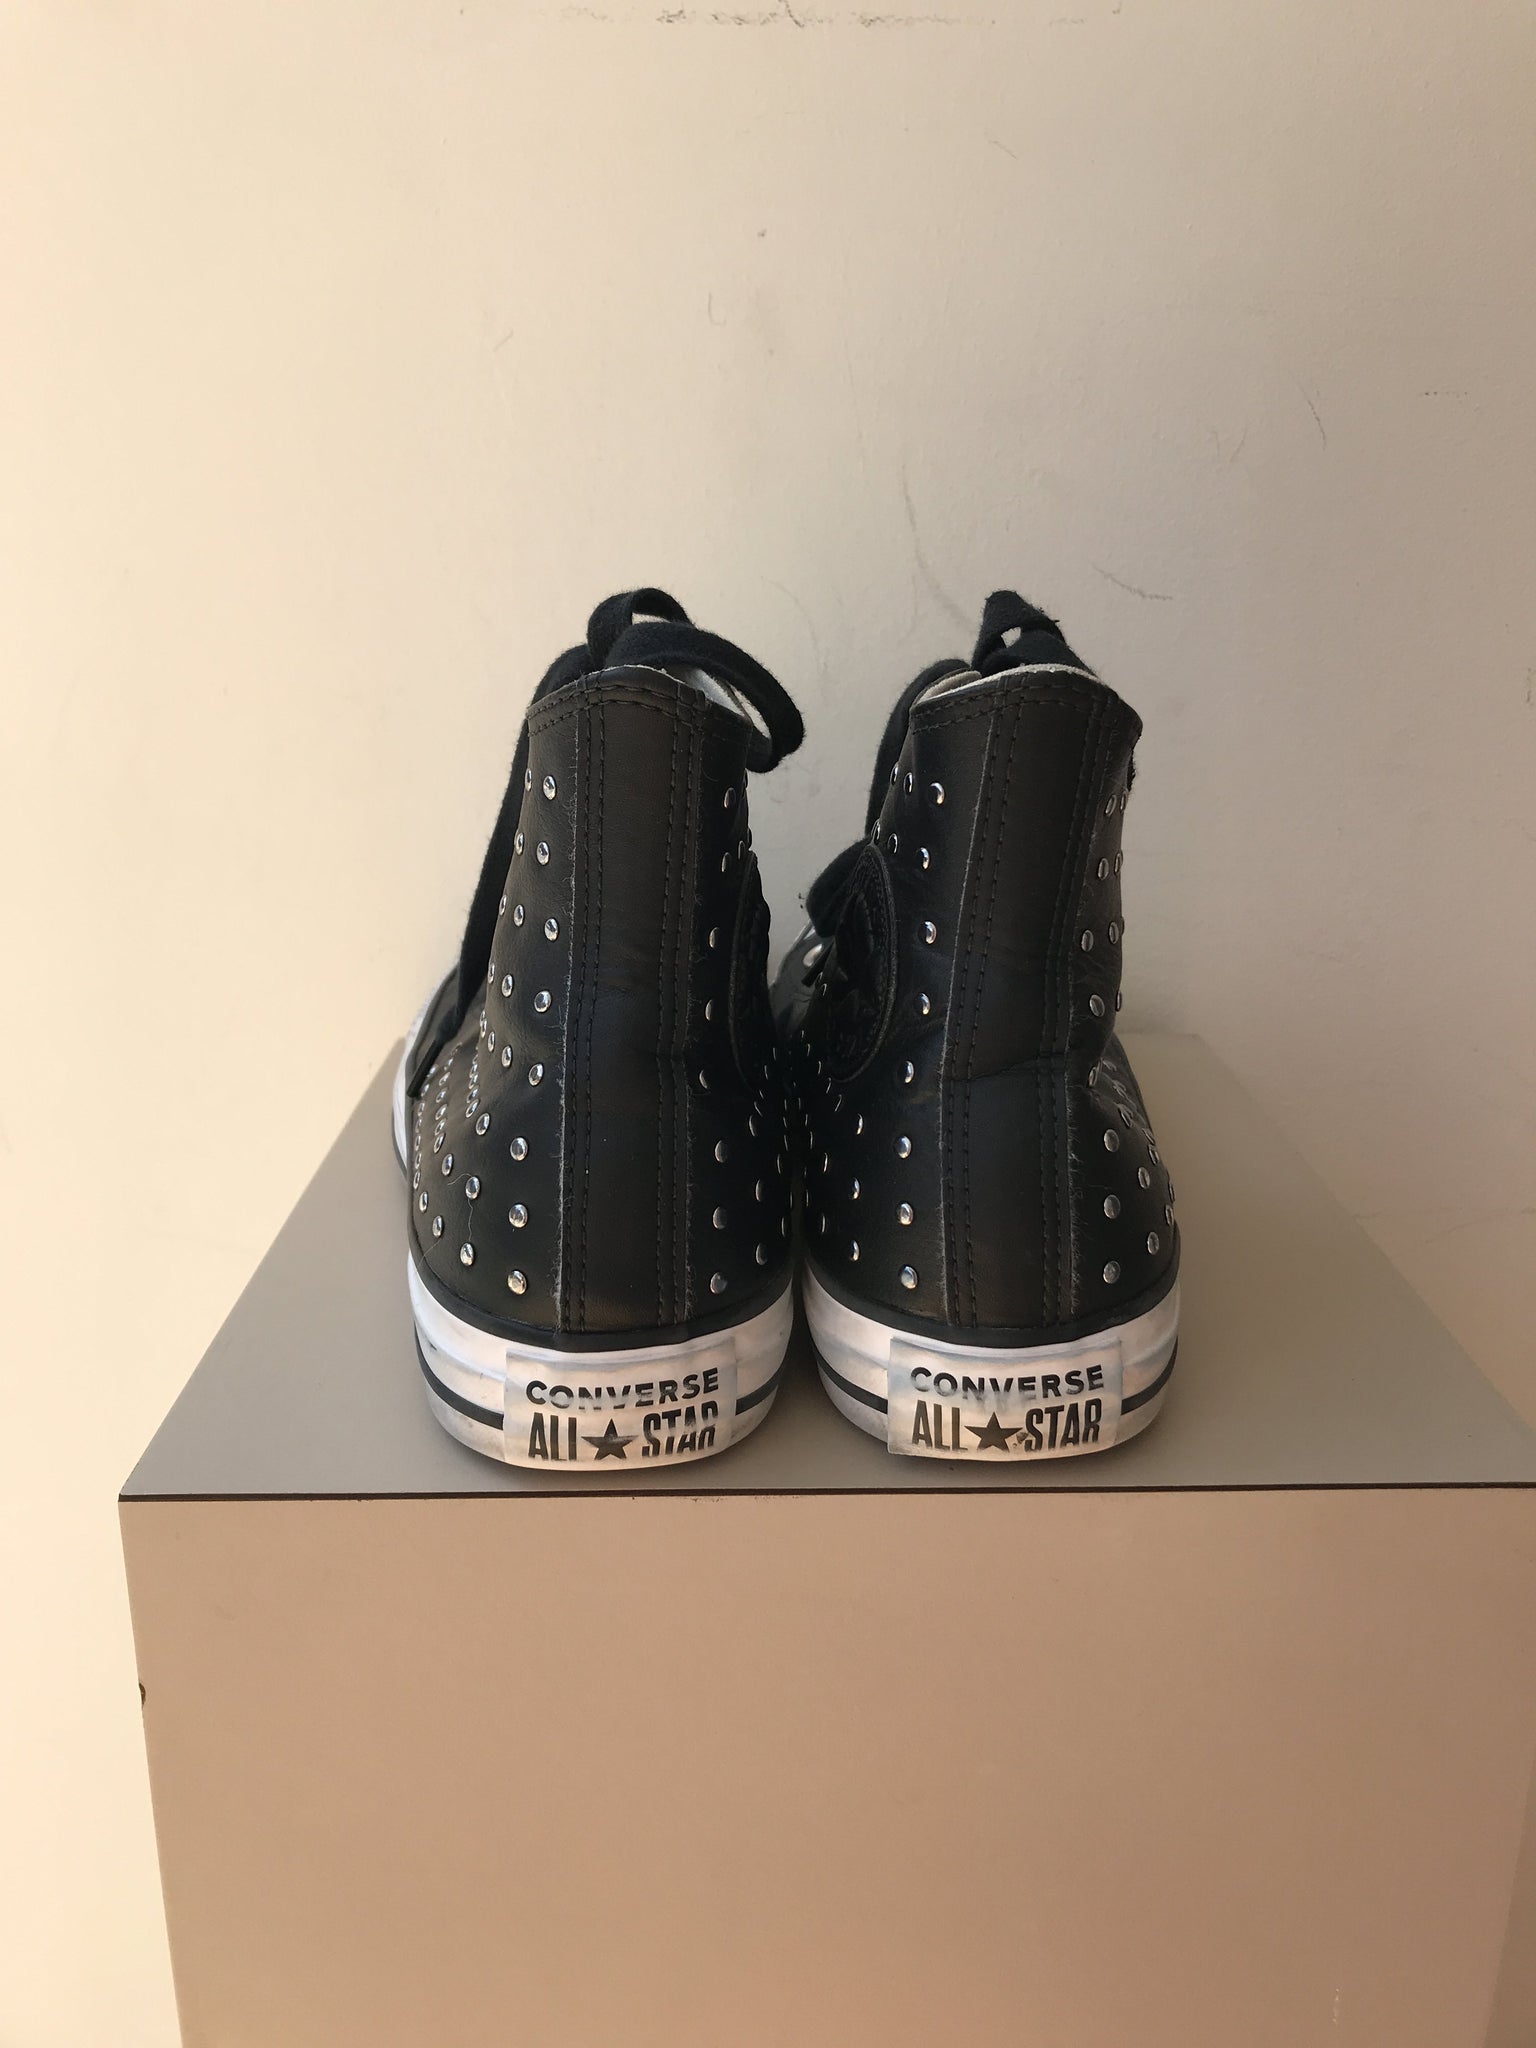 black leather converse size 7